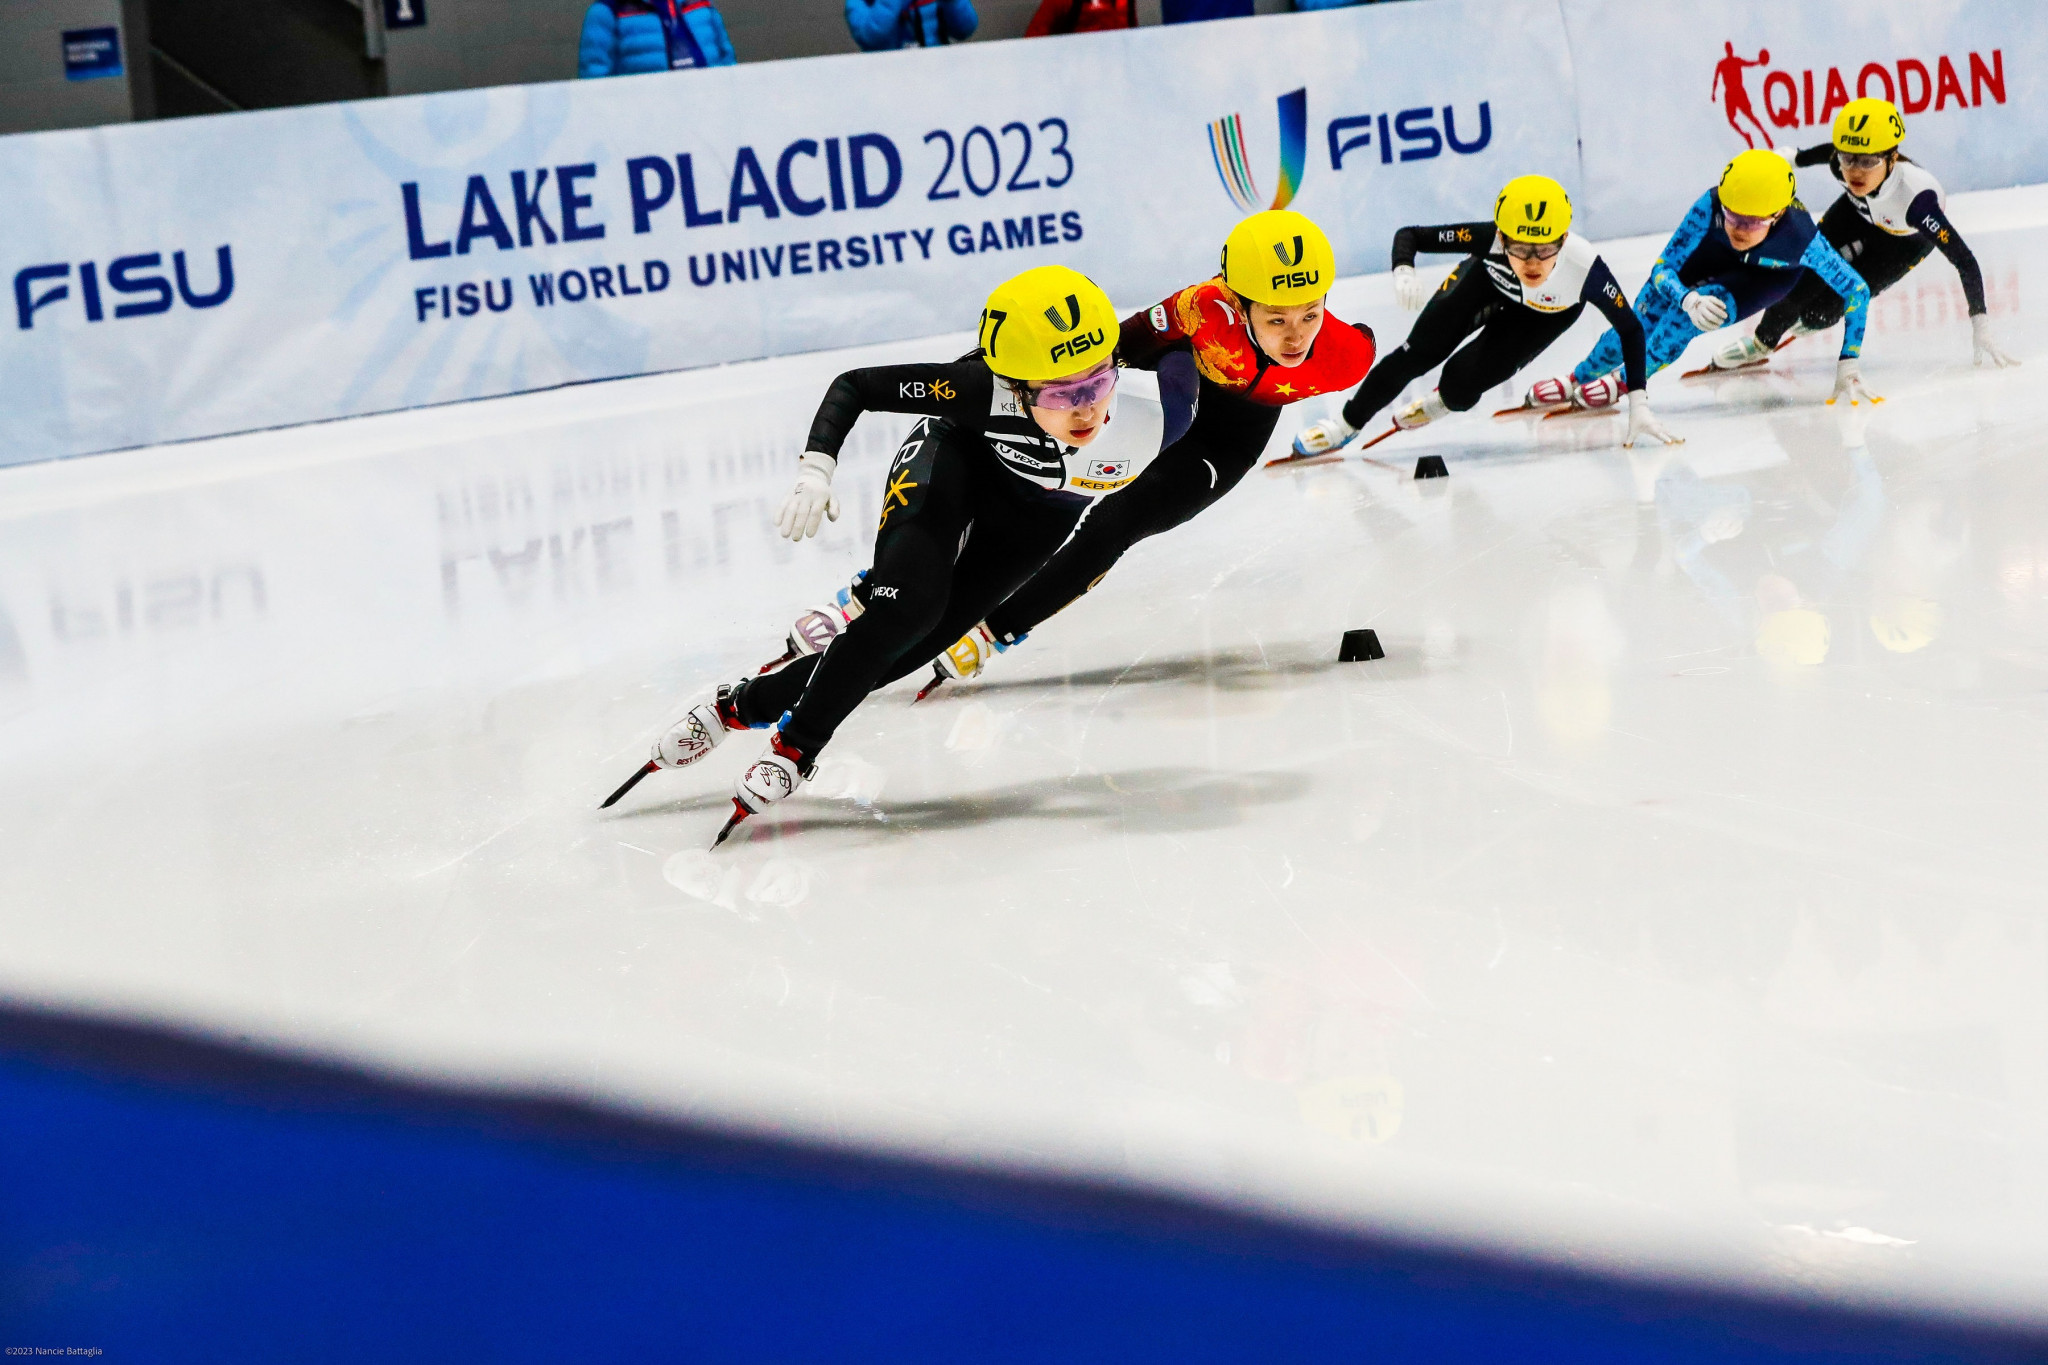 Lake Placid 2023 FISU Winter World University Games: Day nine of competition